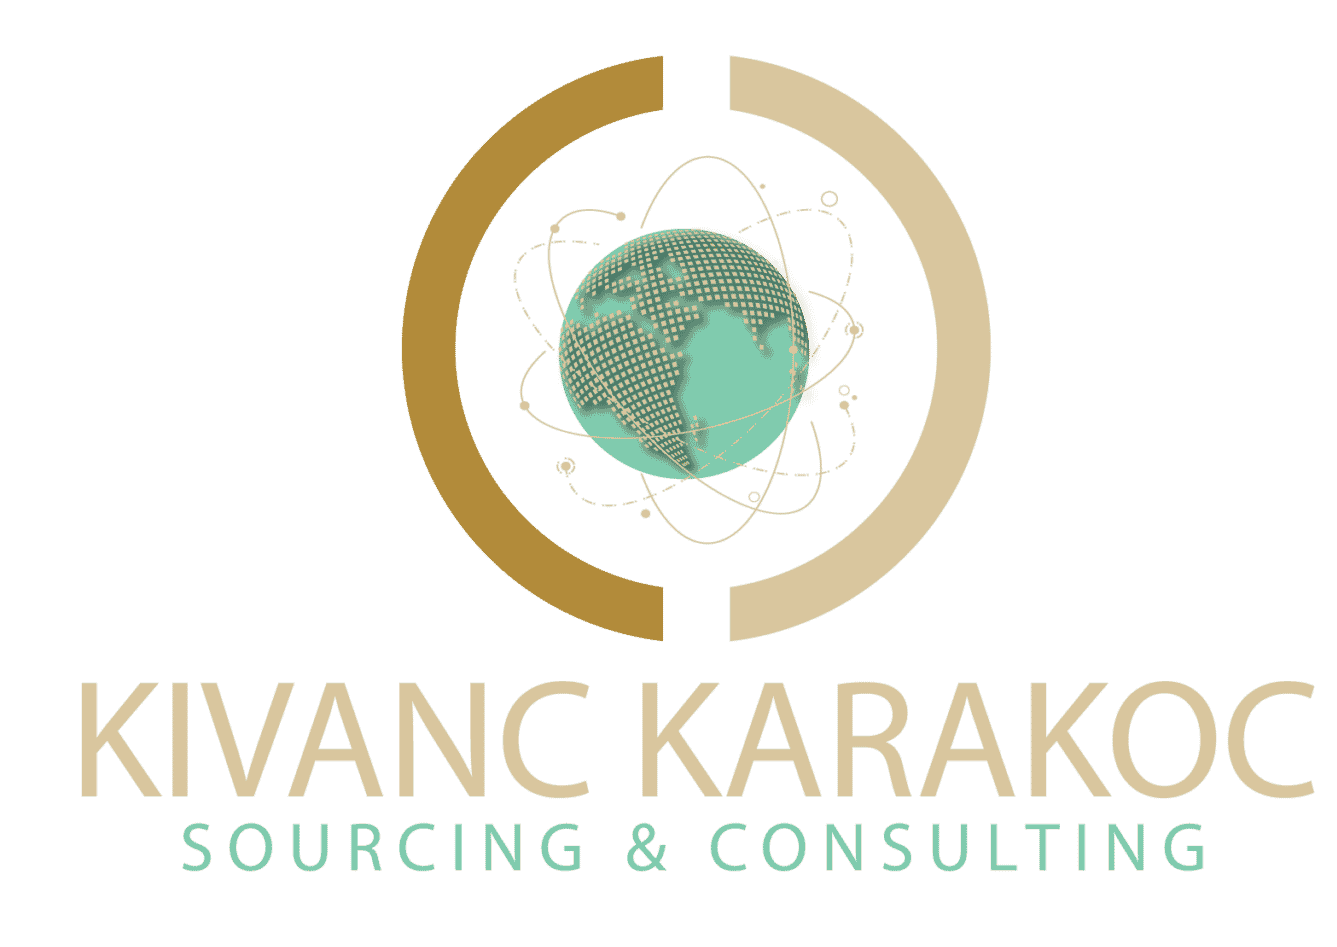 Kivanc Karakoc | Sourcing & Consulting